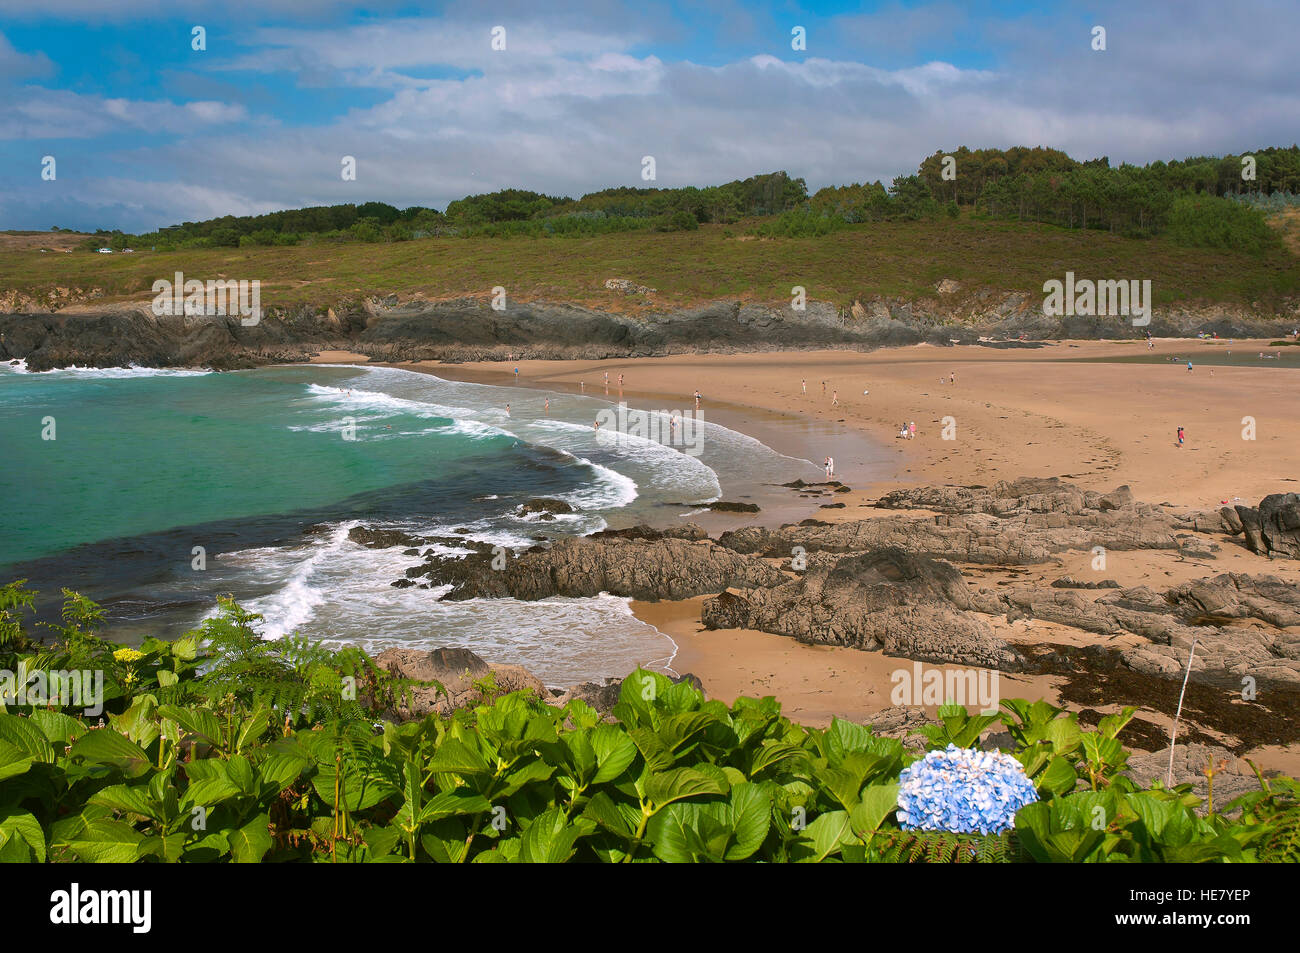 Beach of the River, Meiras - Valdoviño, La Coruña province, Region of Galicia, Spain, Europe Stock Photo